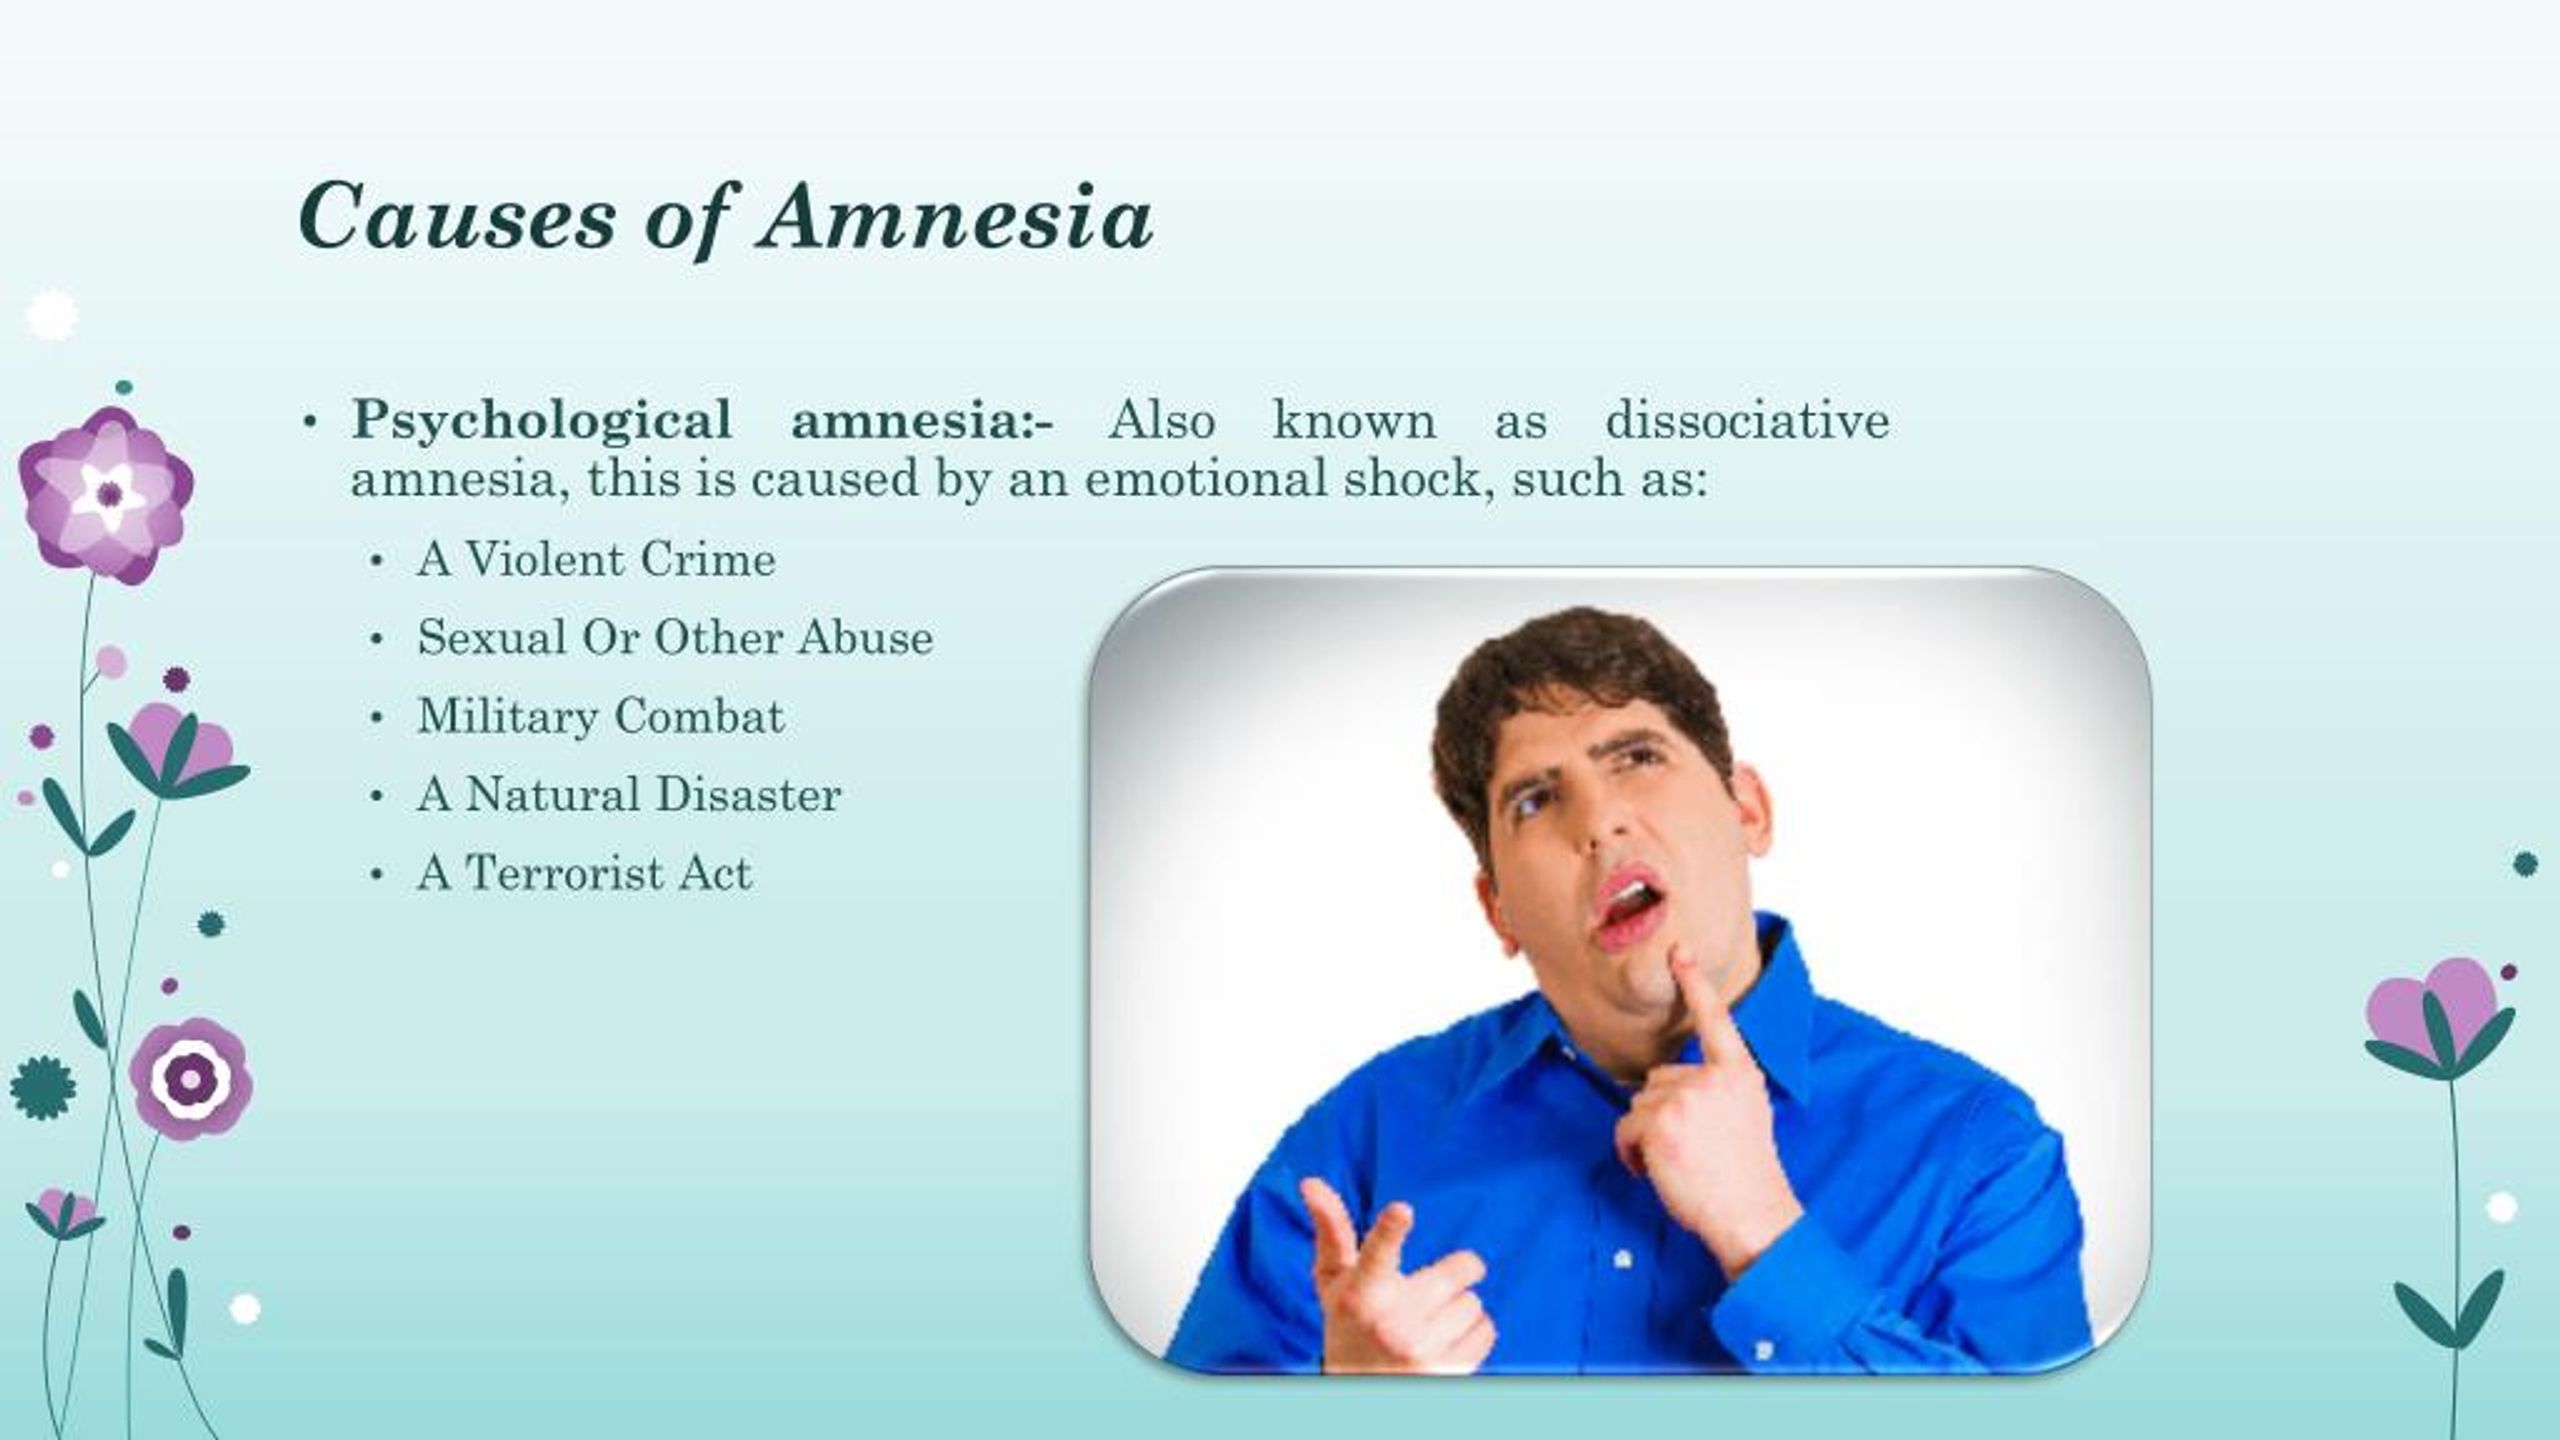 temporary amnesia